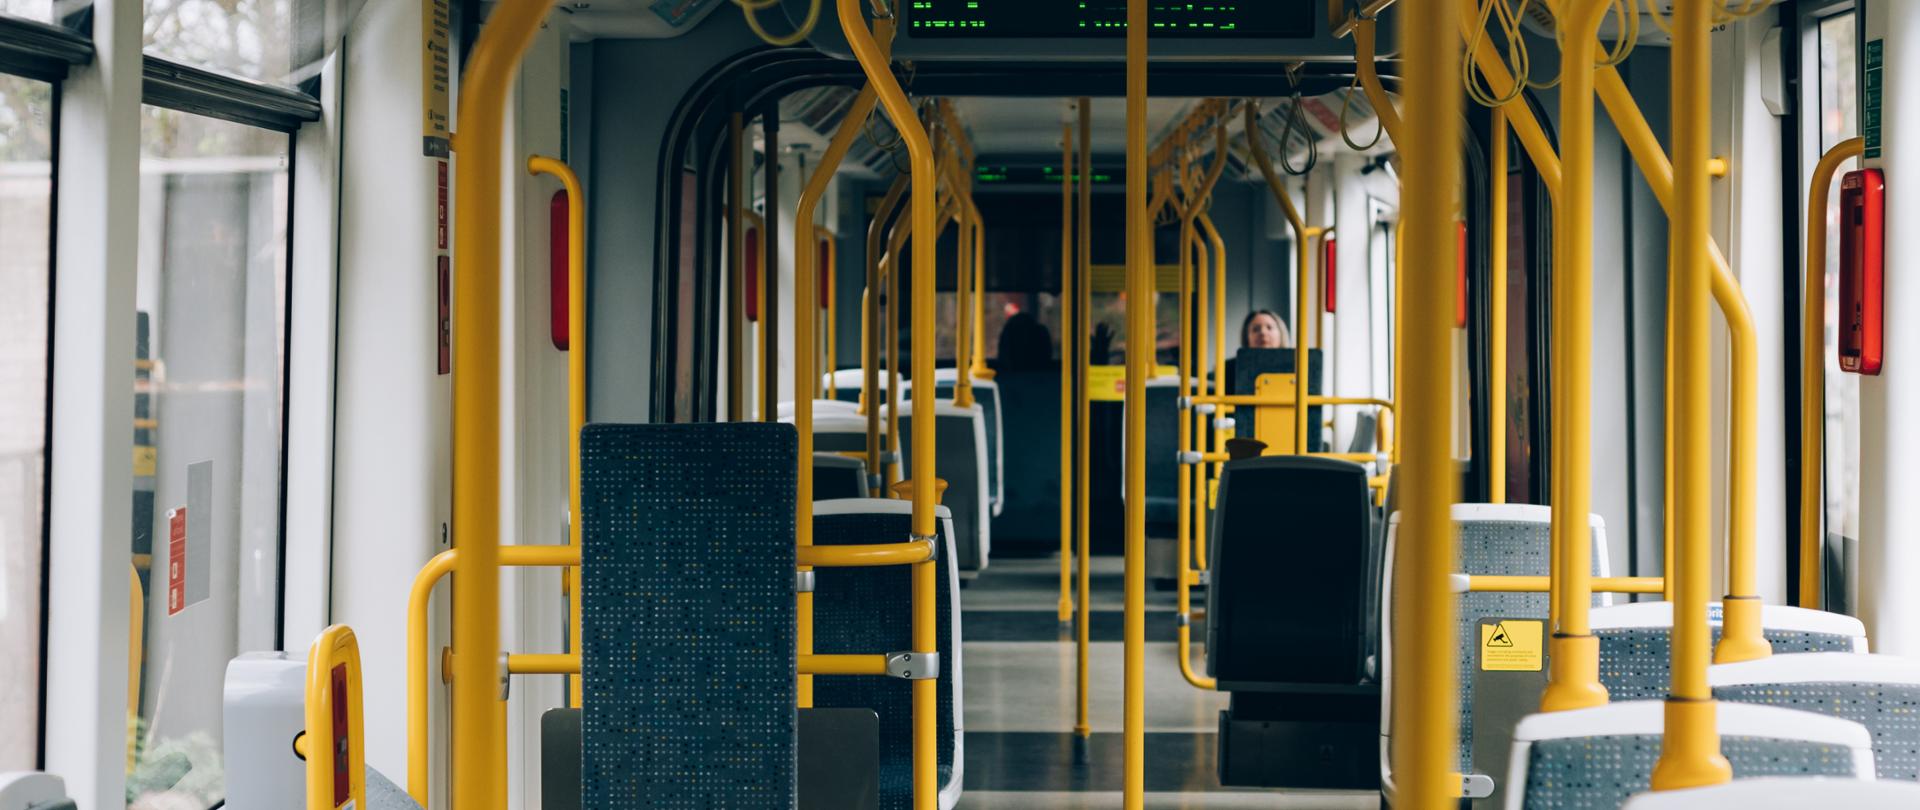 Wnętrze autobusu, szare fotele, żółte poręcze. 